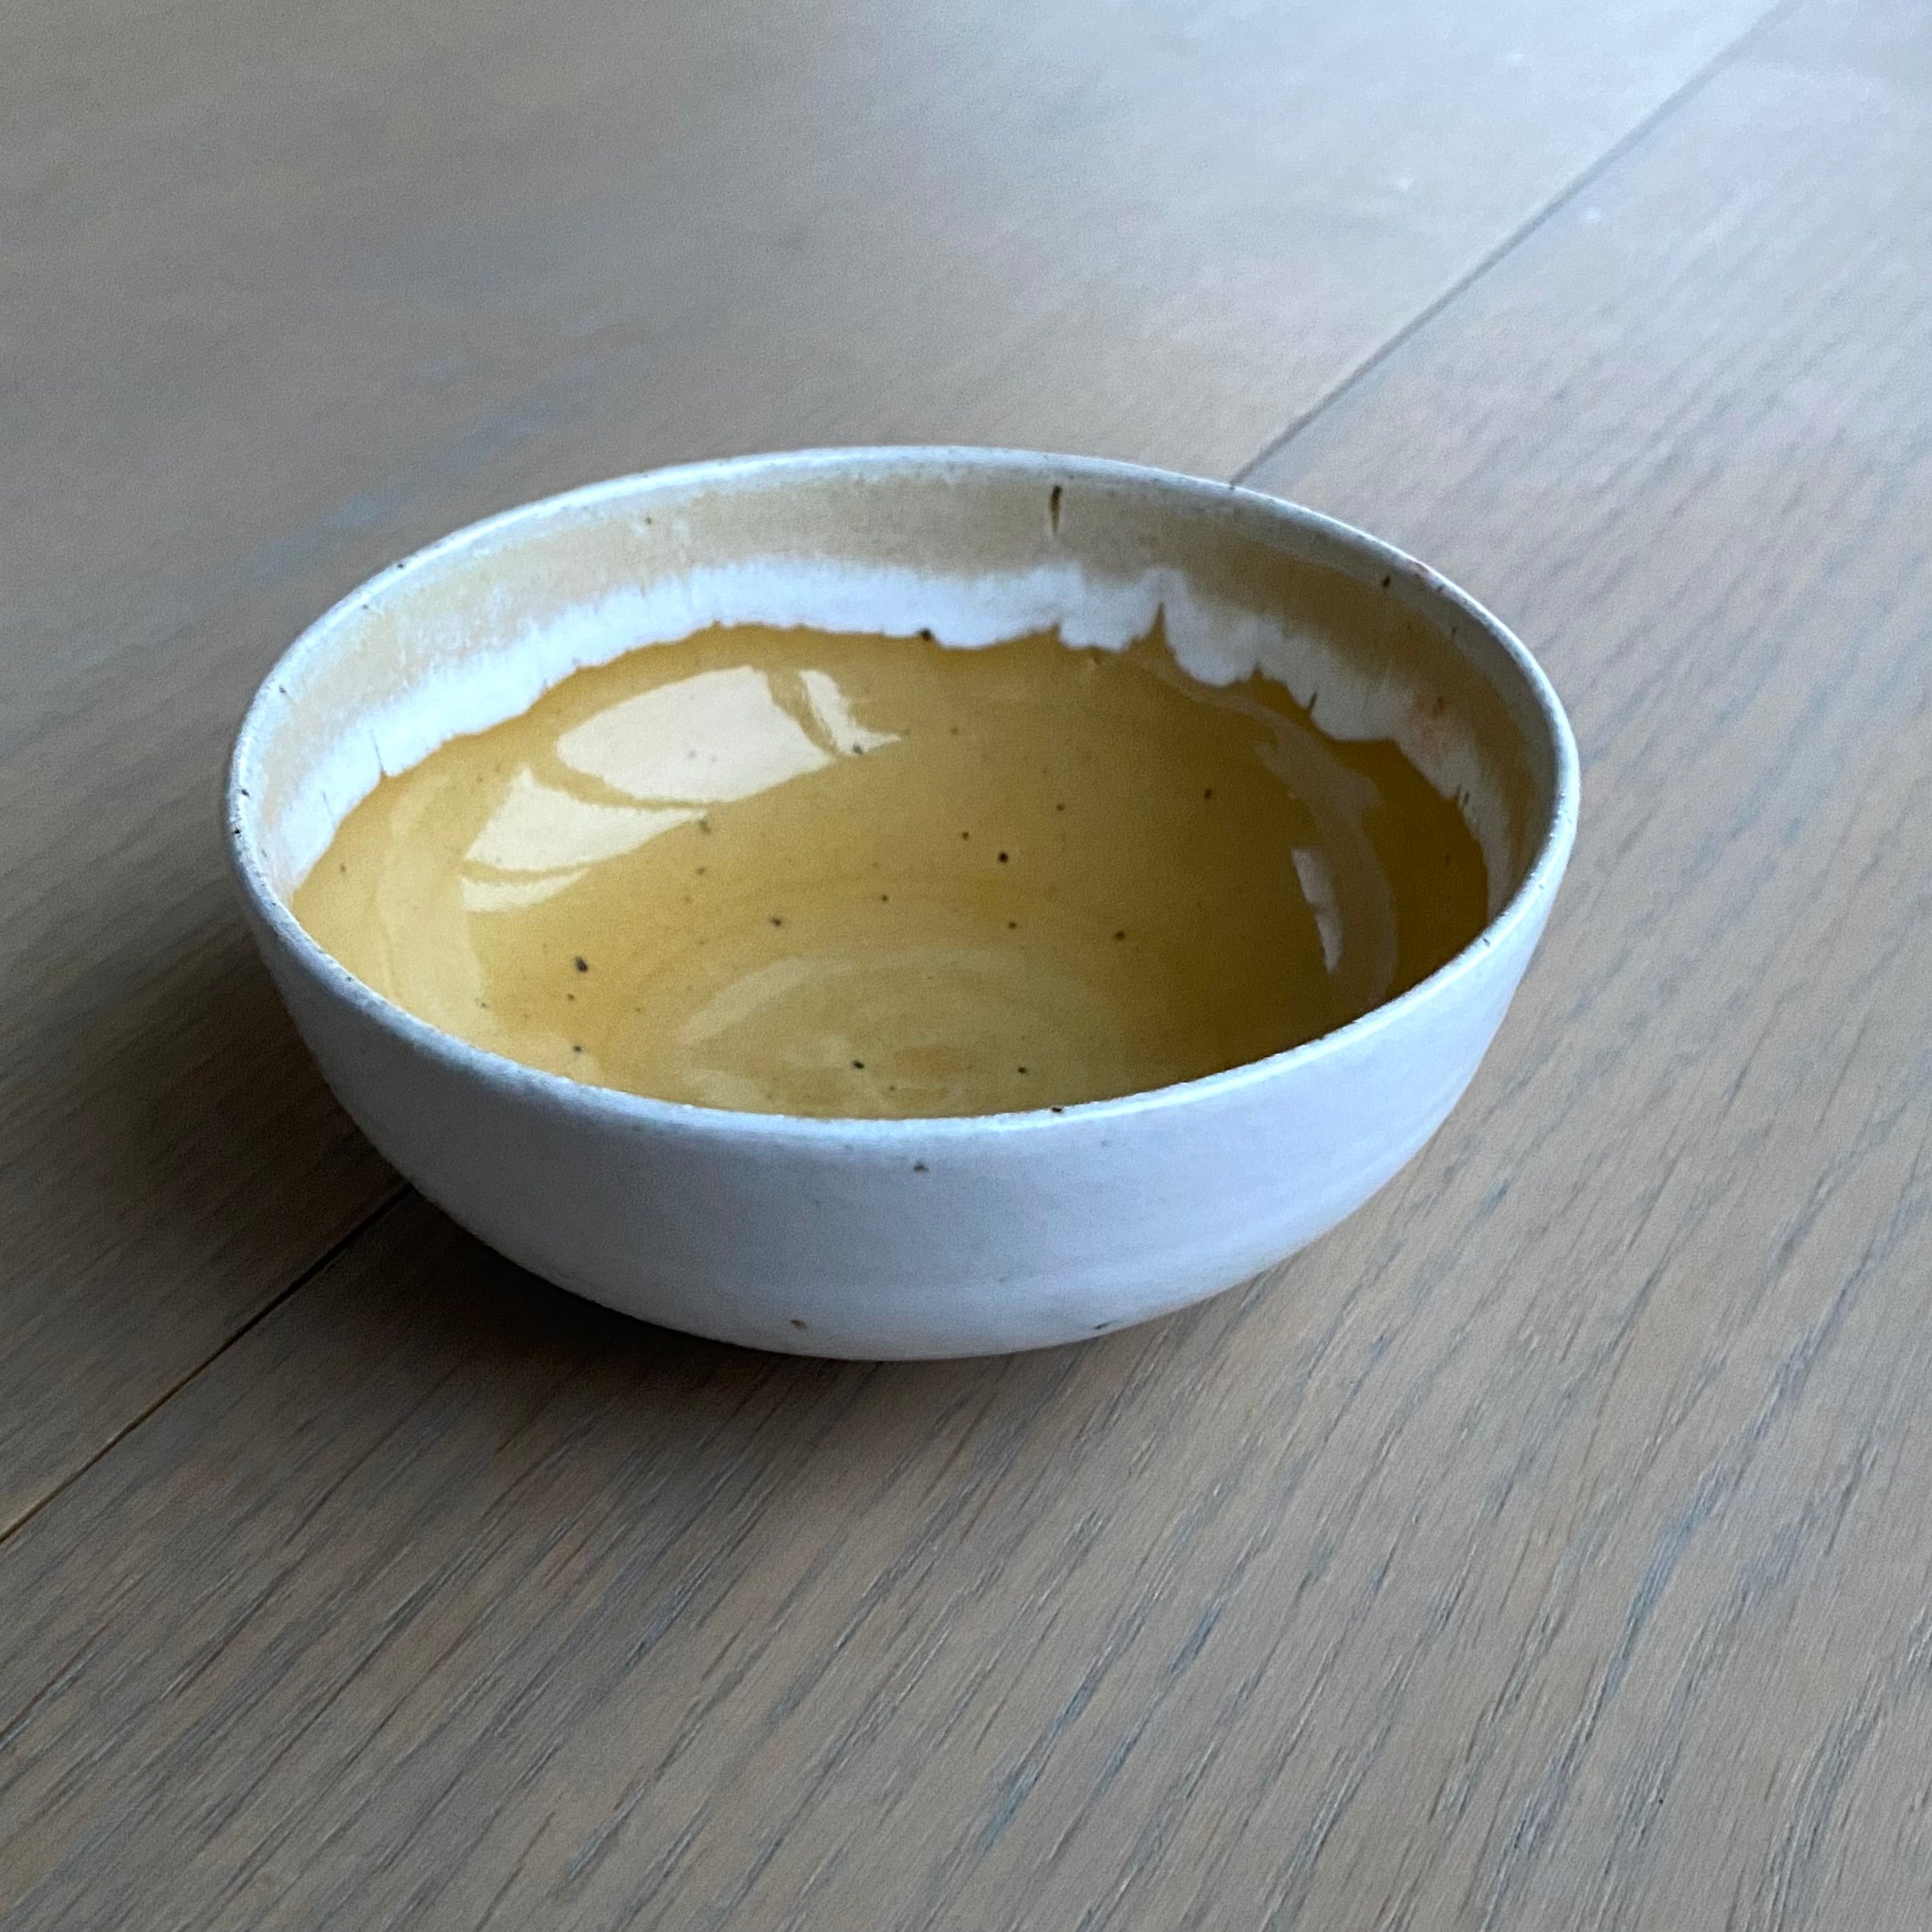 Tasja P small breakfast bowl - off white and warm yellow